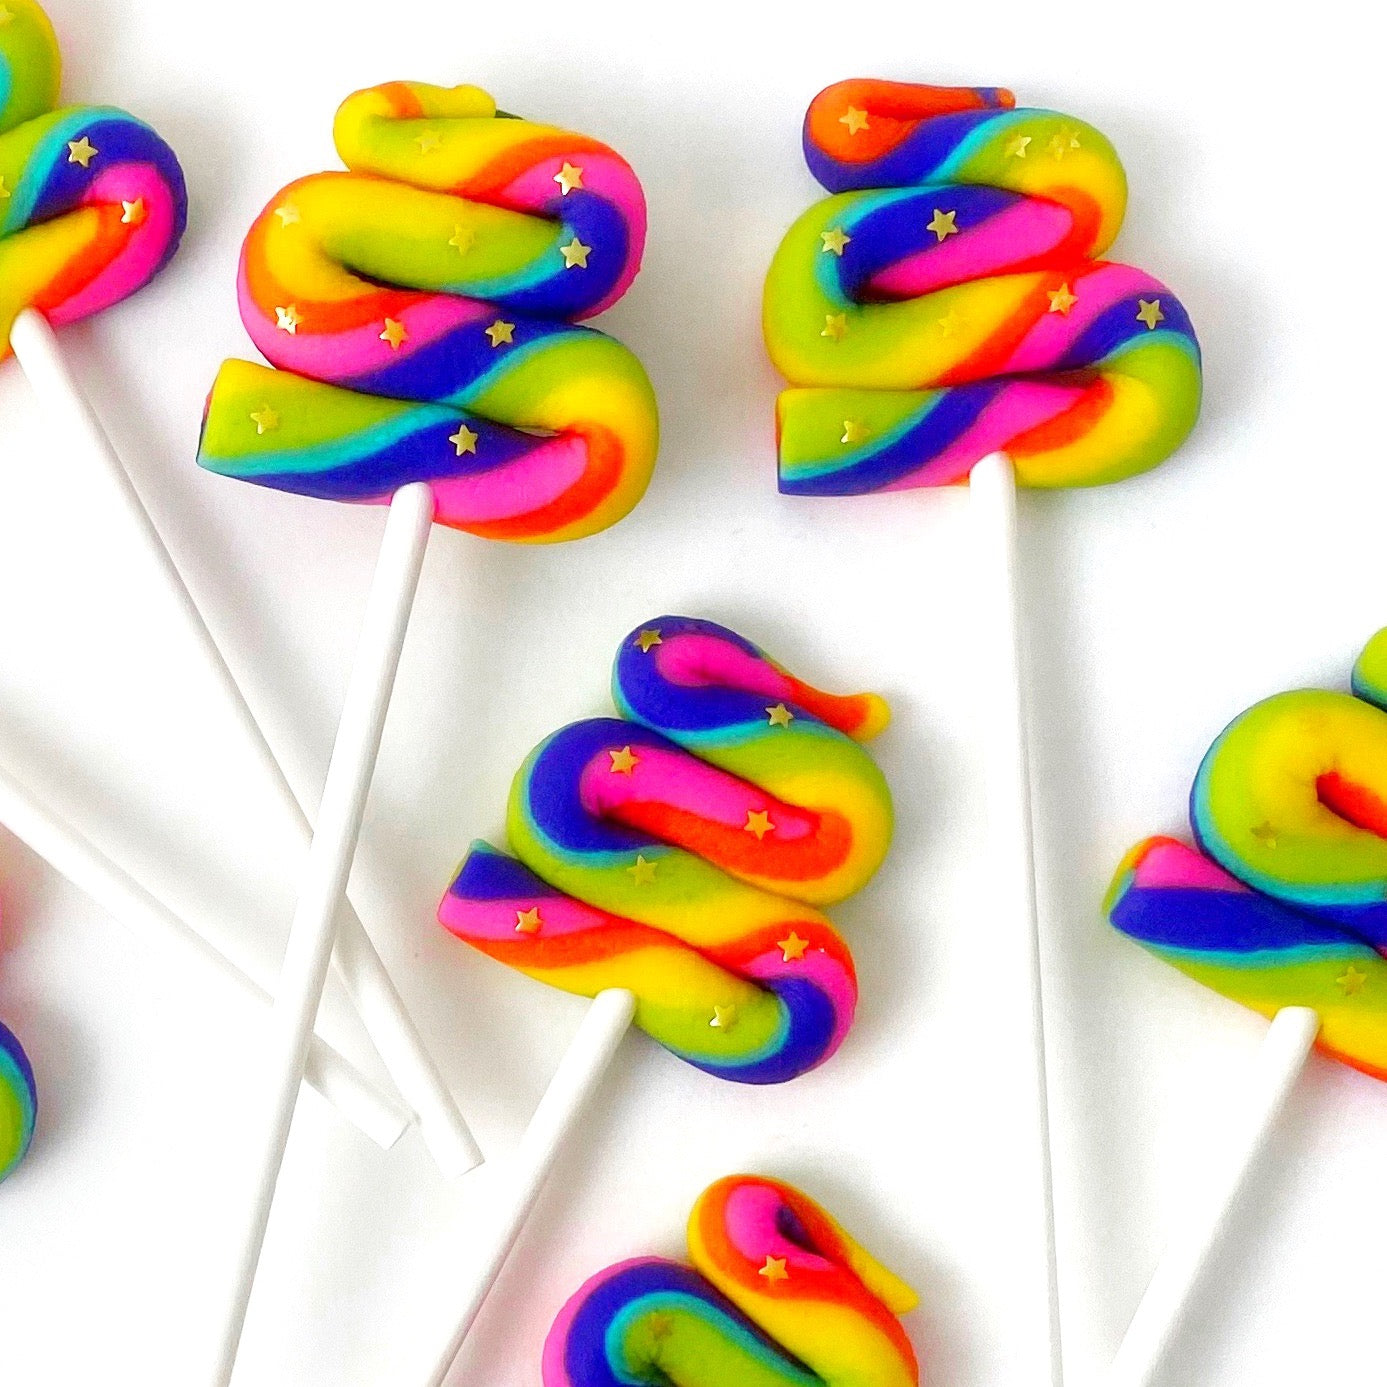 unicorn poop rainbow marzipan candy lollipops closeup